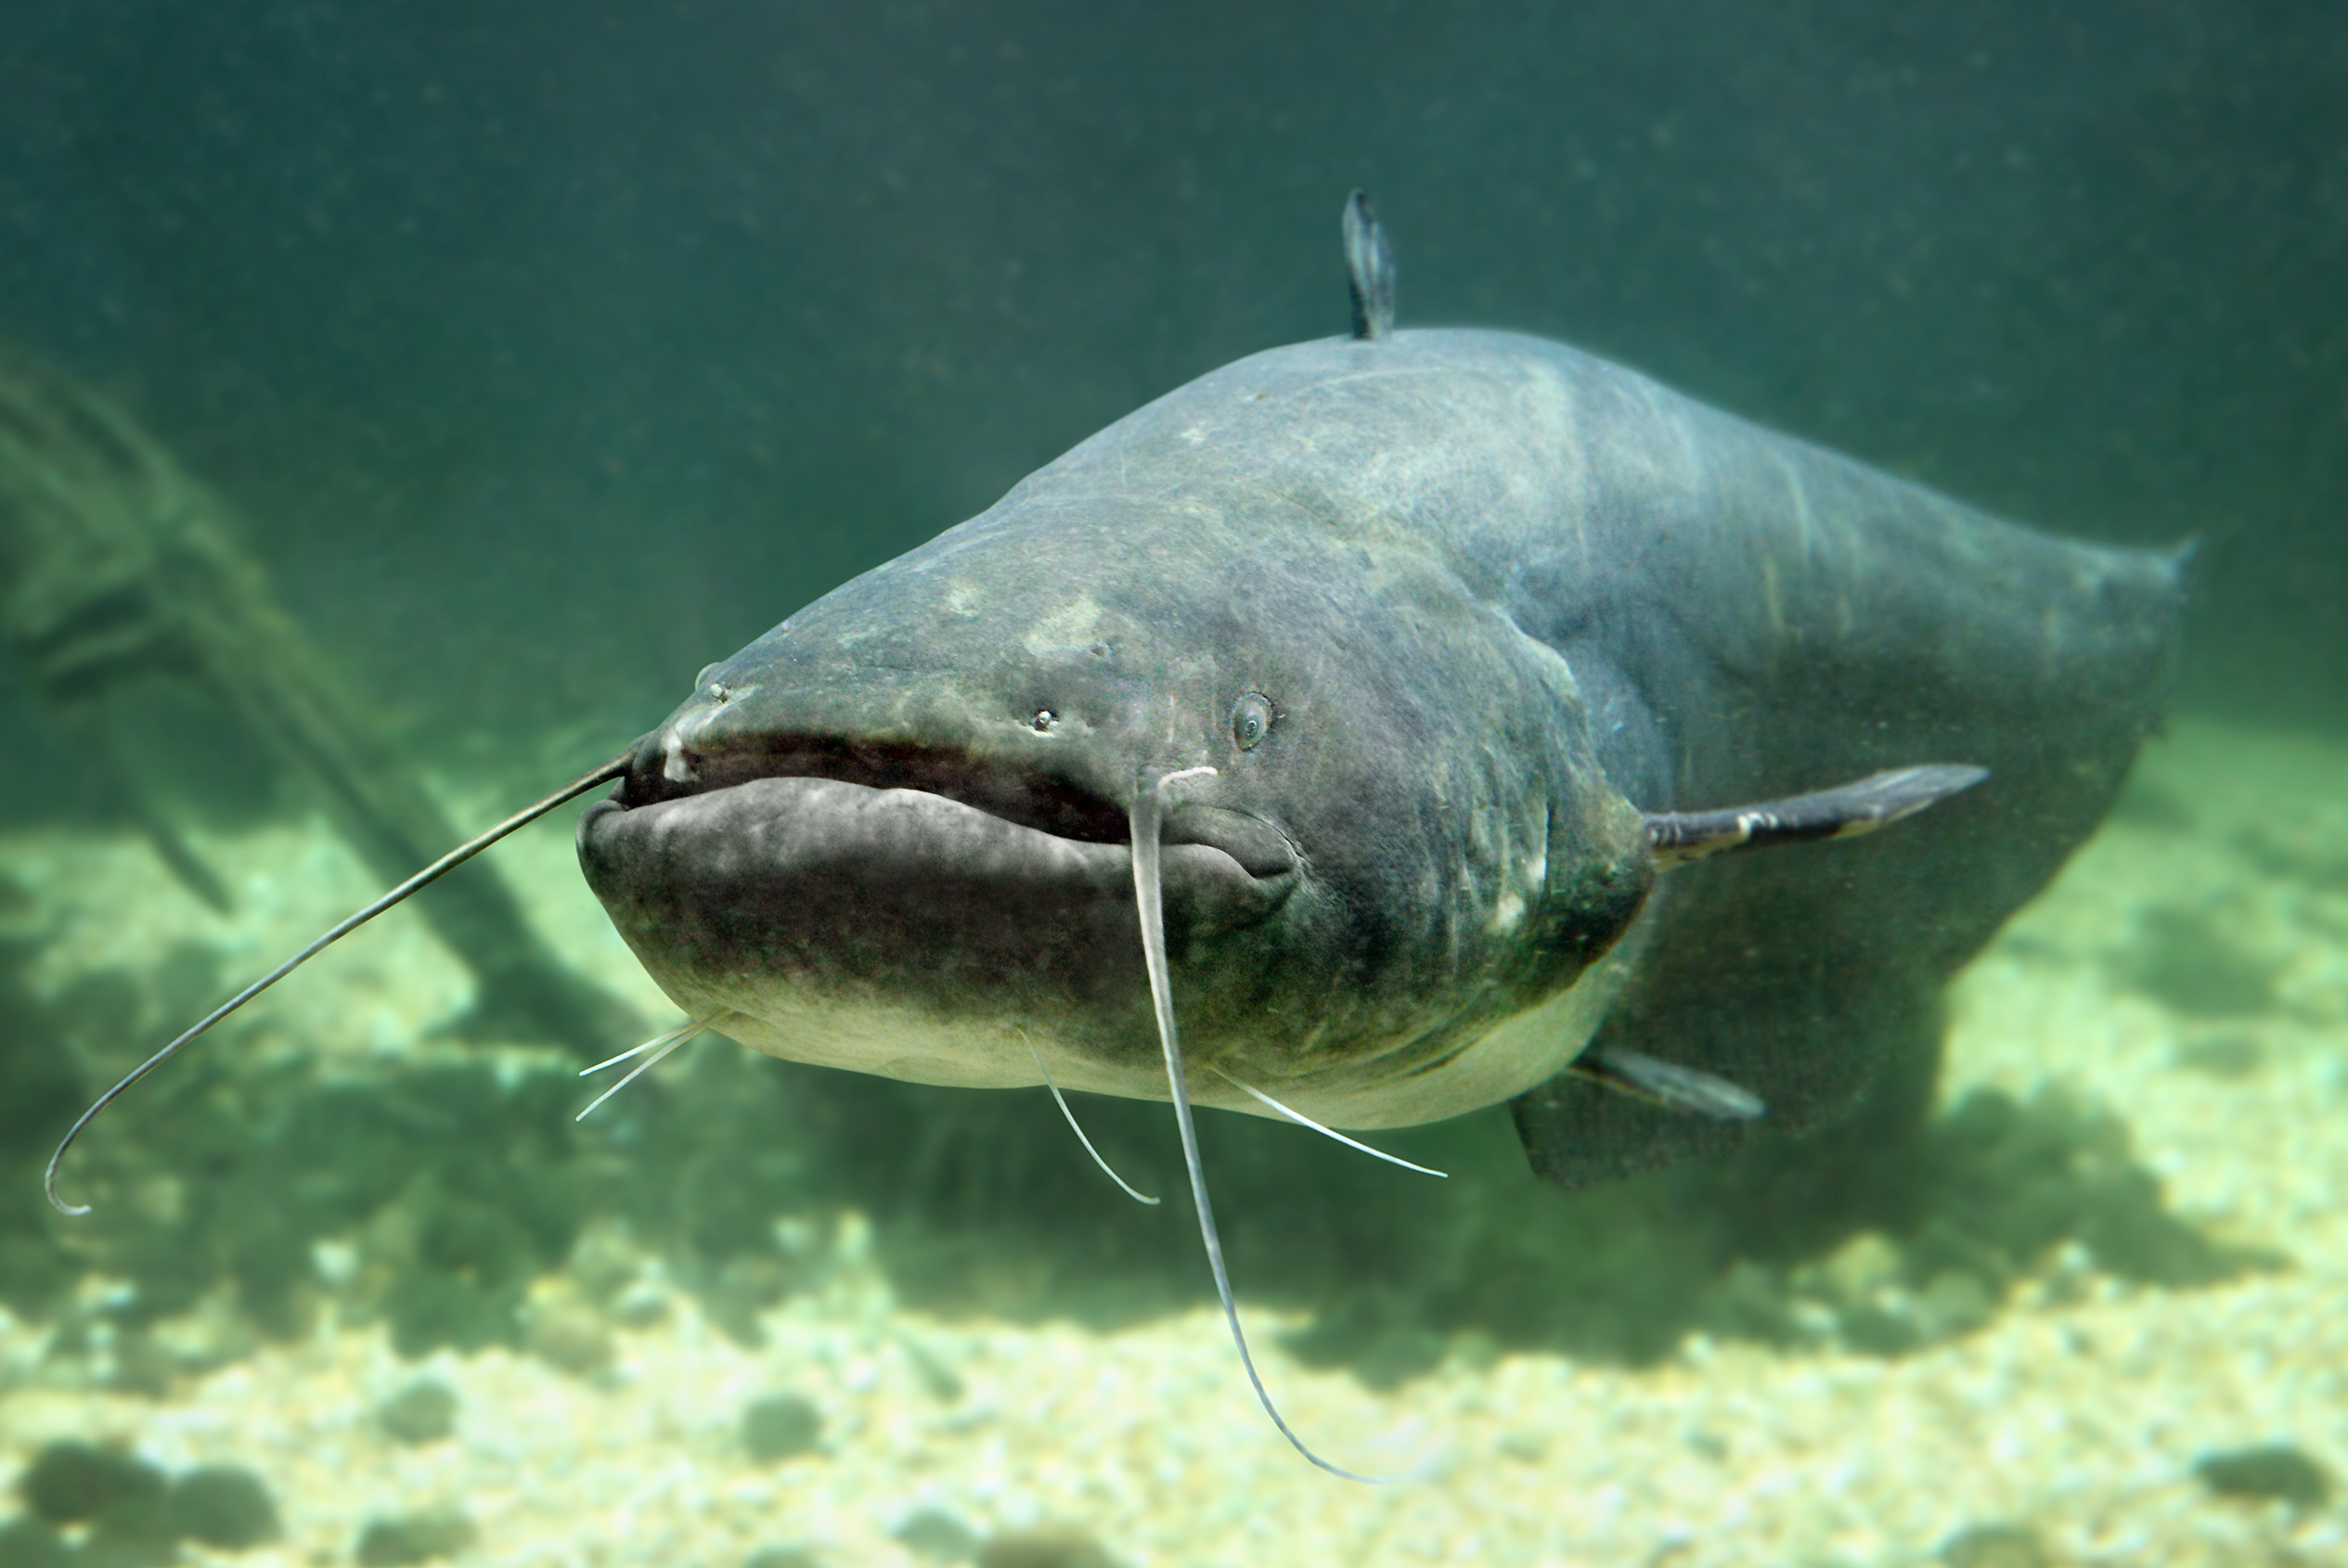 Lake Gaston catfish video shows mysterious behavior